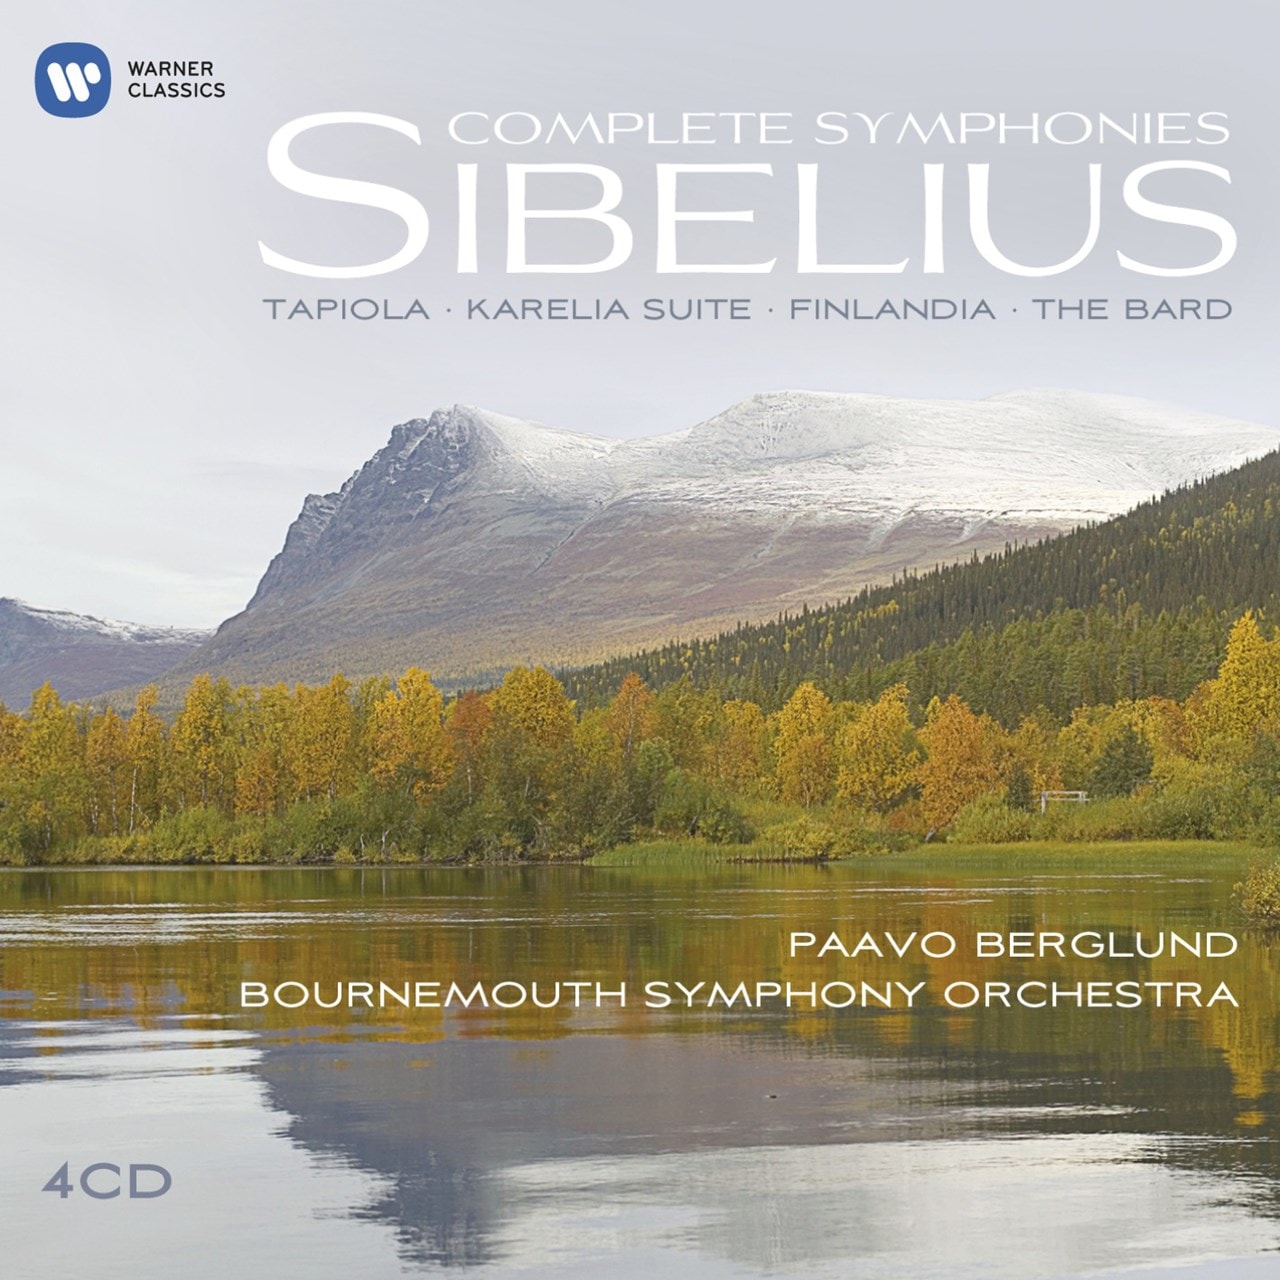 Sibelius Complete Symphonies Cd Album Free Shipping Over £20 Hmv Store